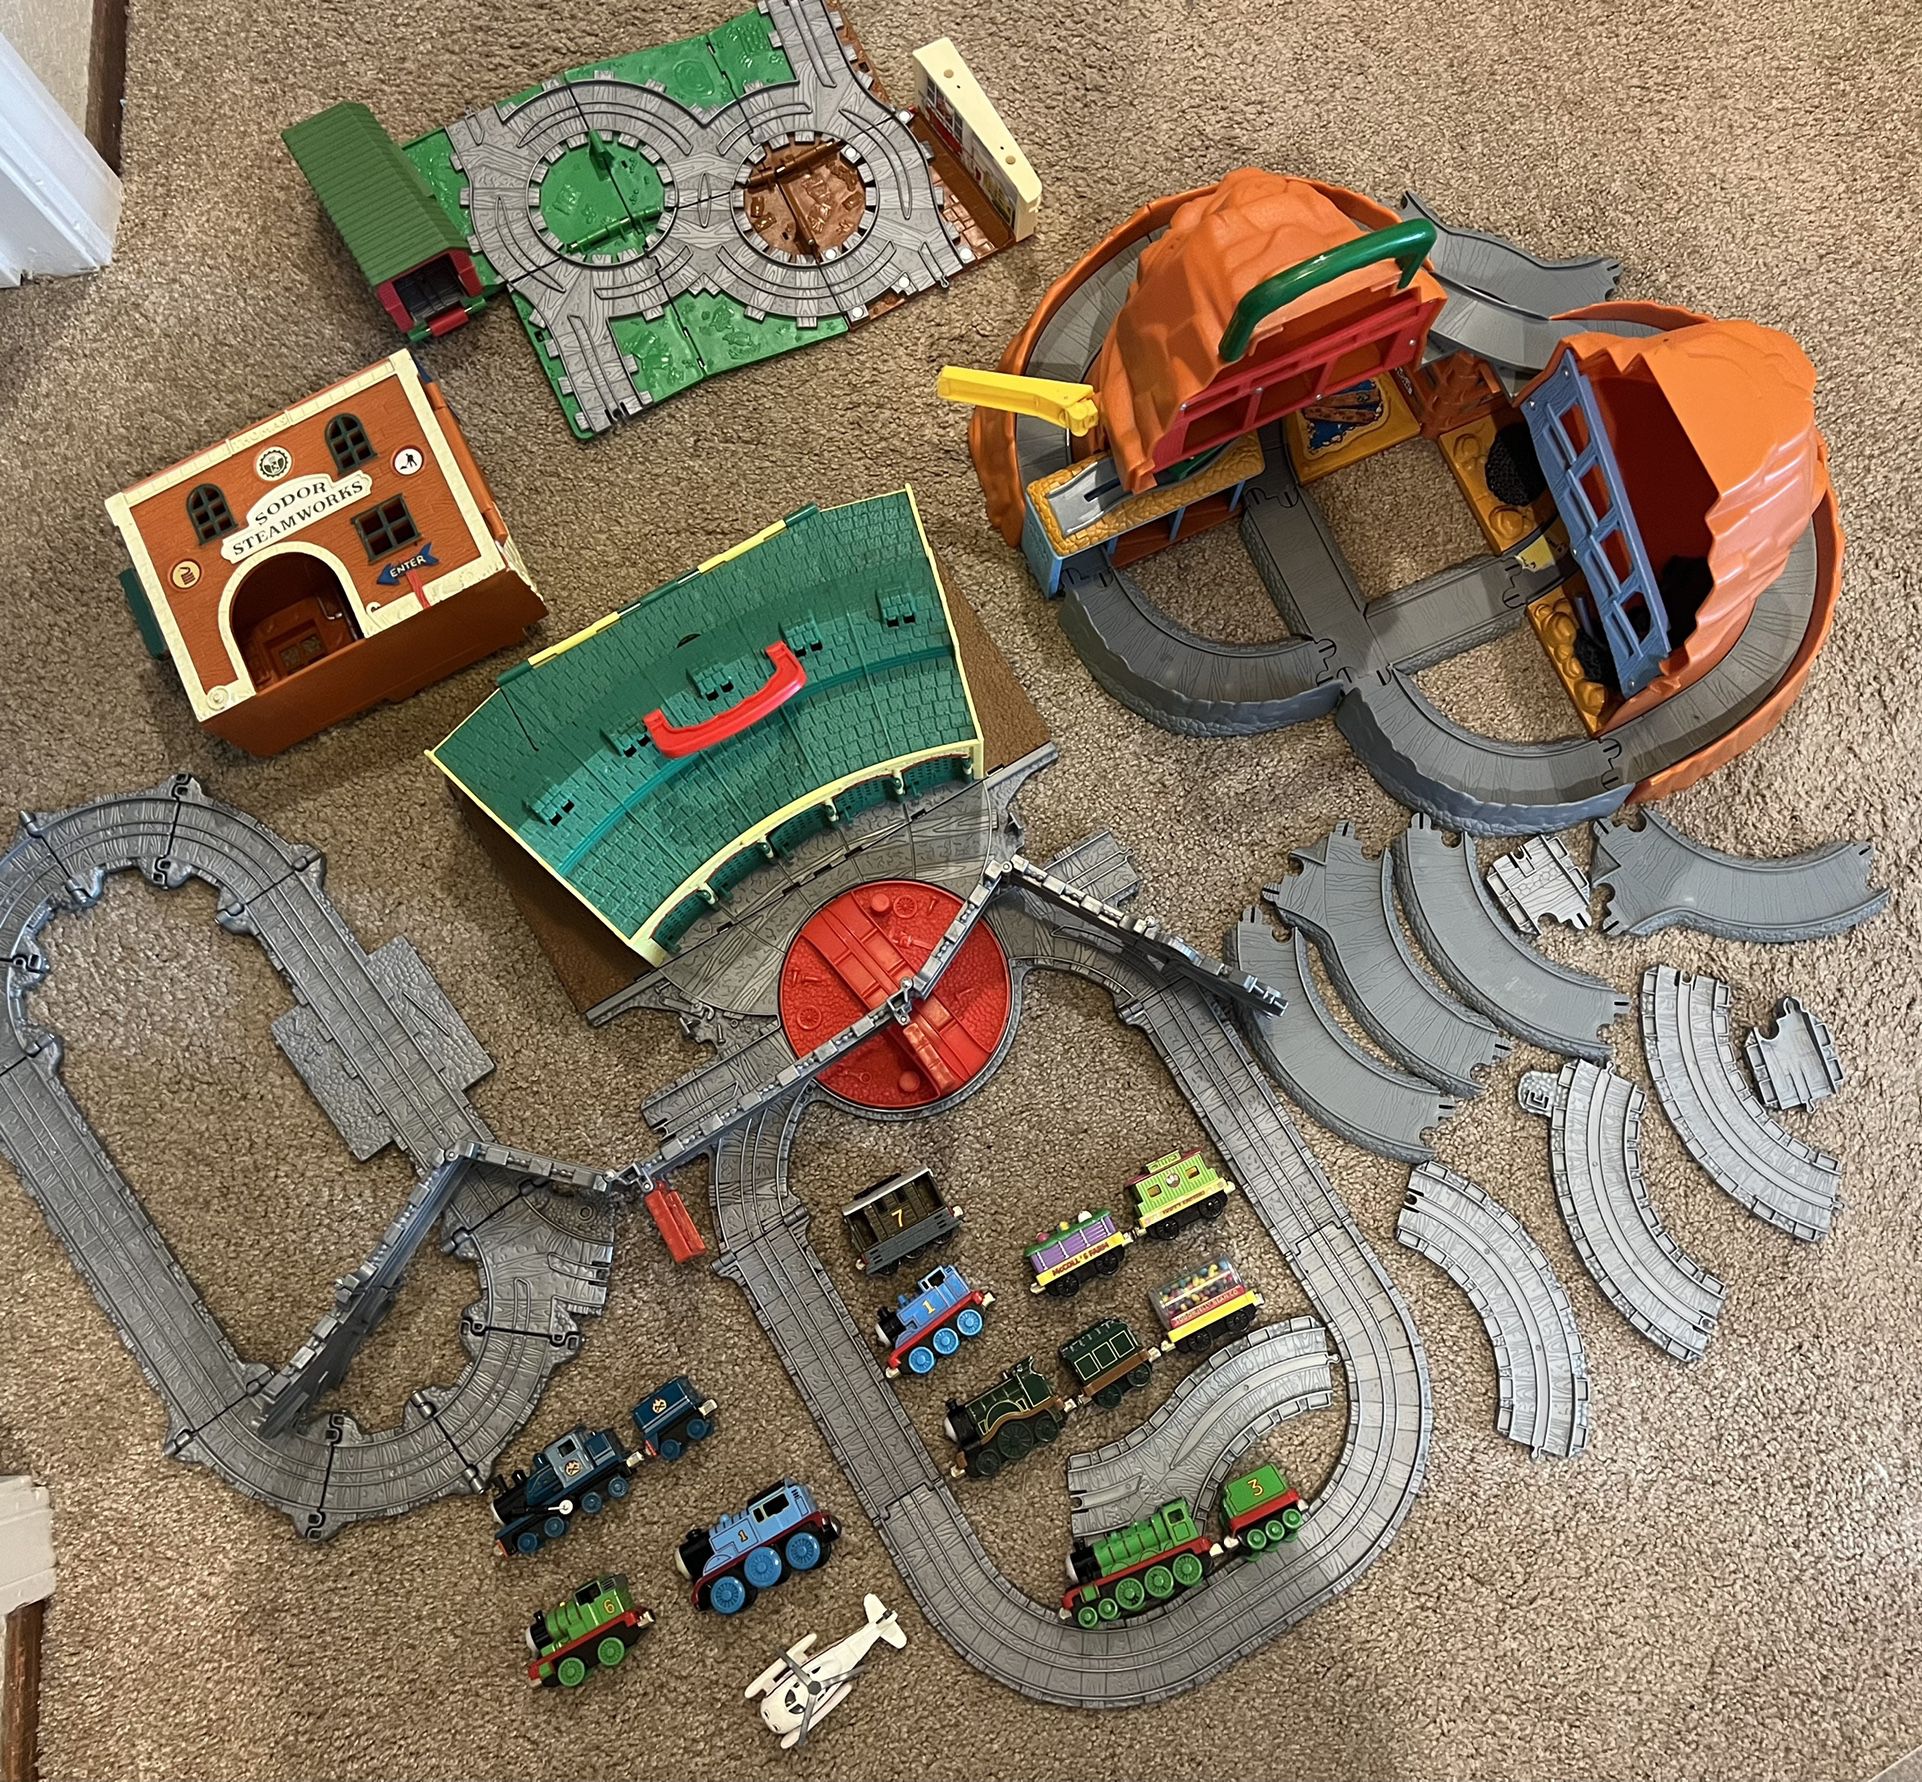 Thomas & Friends Metal Die-cast Trains & Track